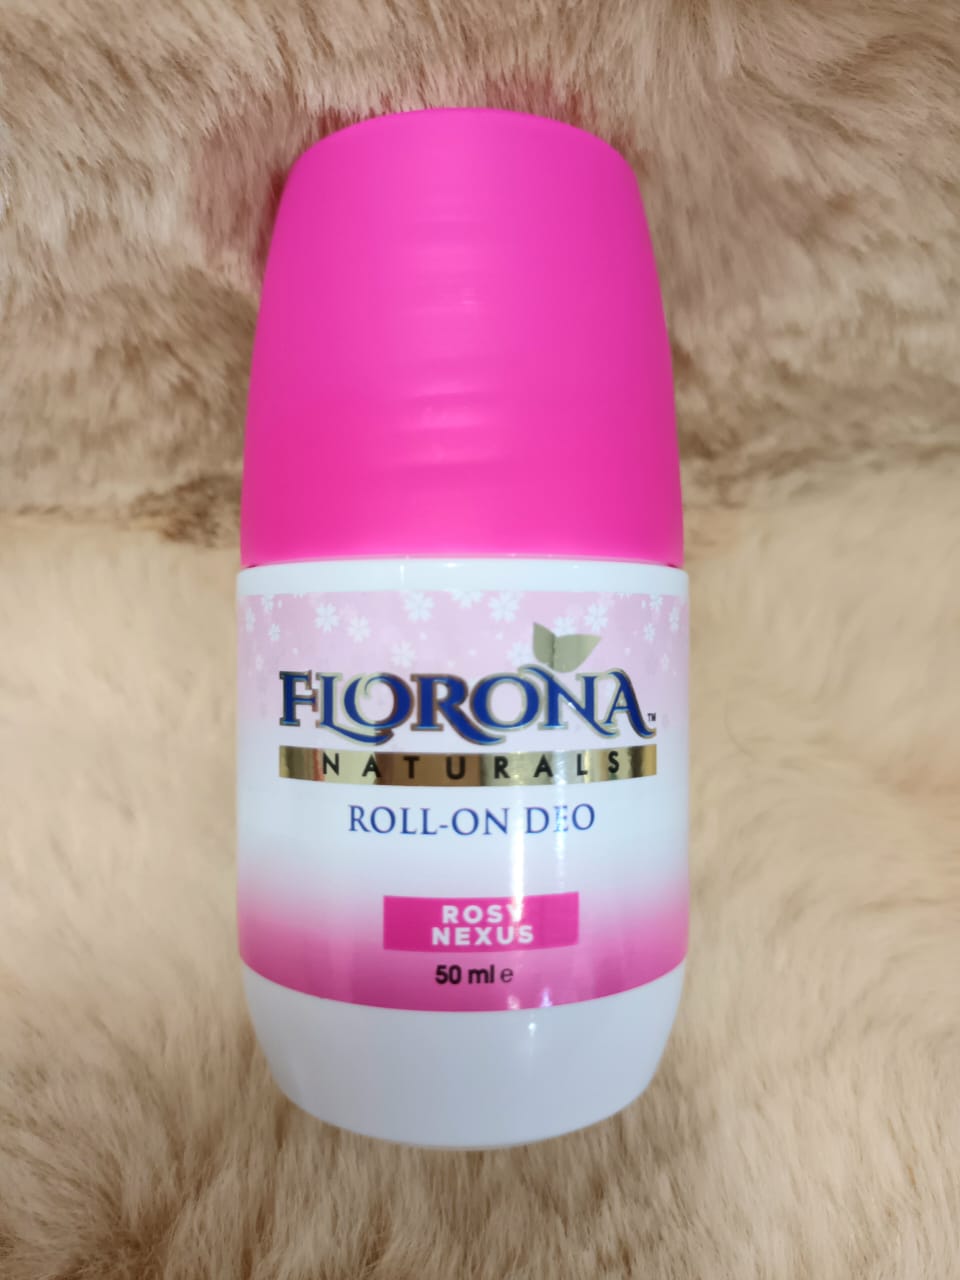 Florona Naturals Fragrance Gift Set